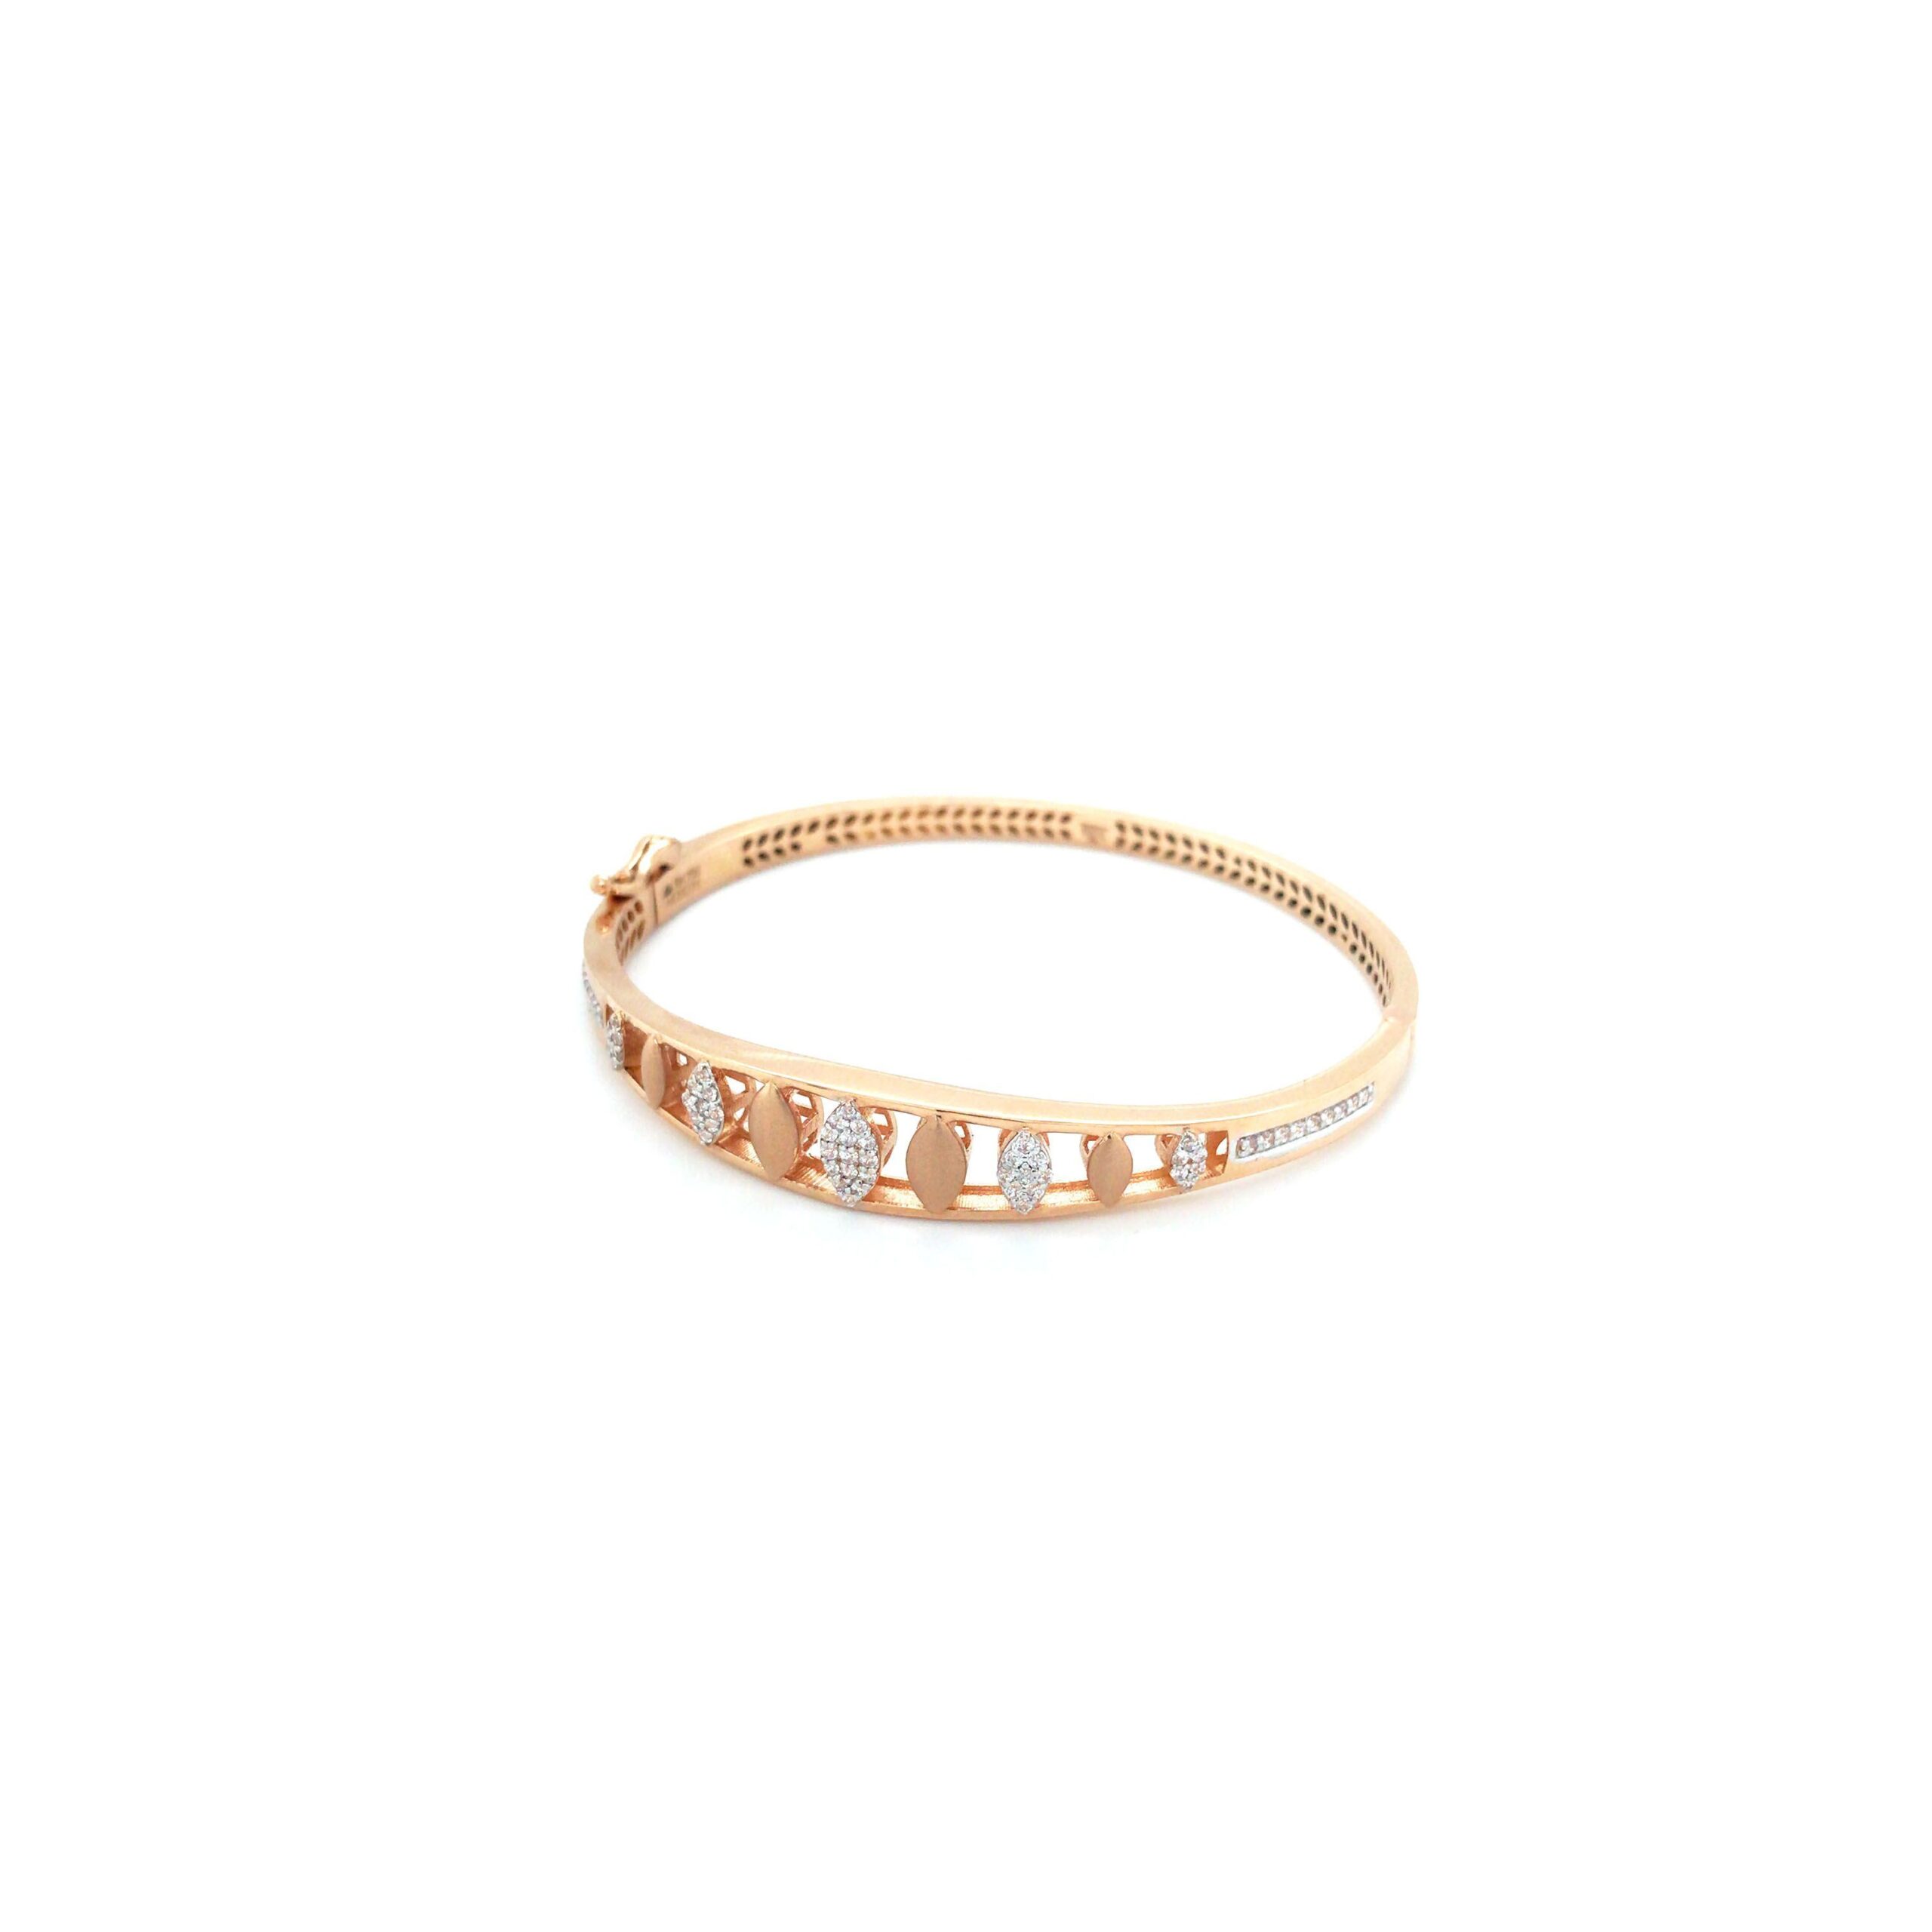 LOVE# bracelet, 10 diamonds